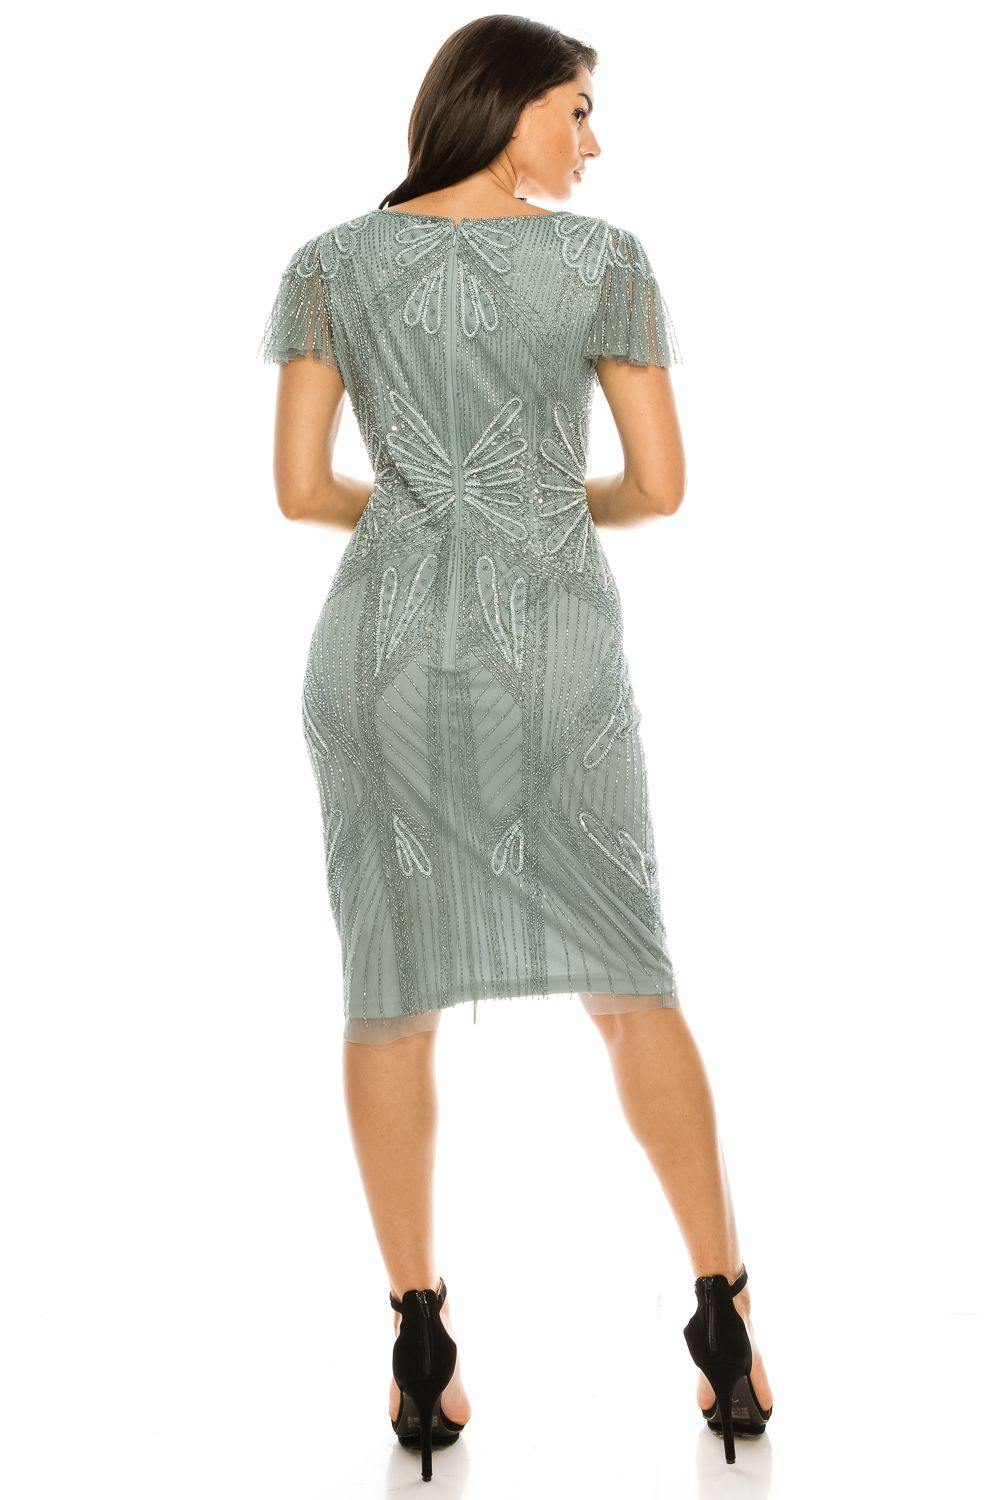 Adrianna Papell  Short Plus Size Dress AP1E205798W - The Dress Outlet